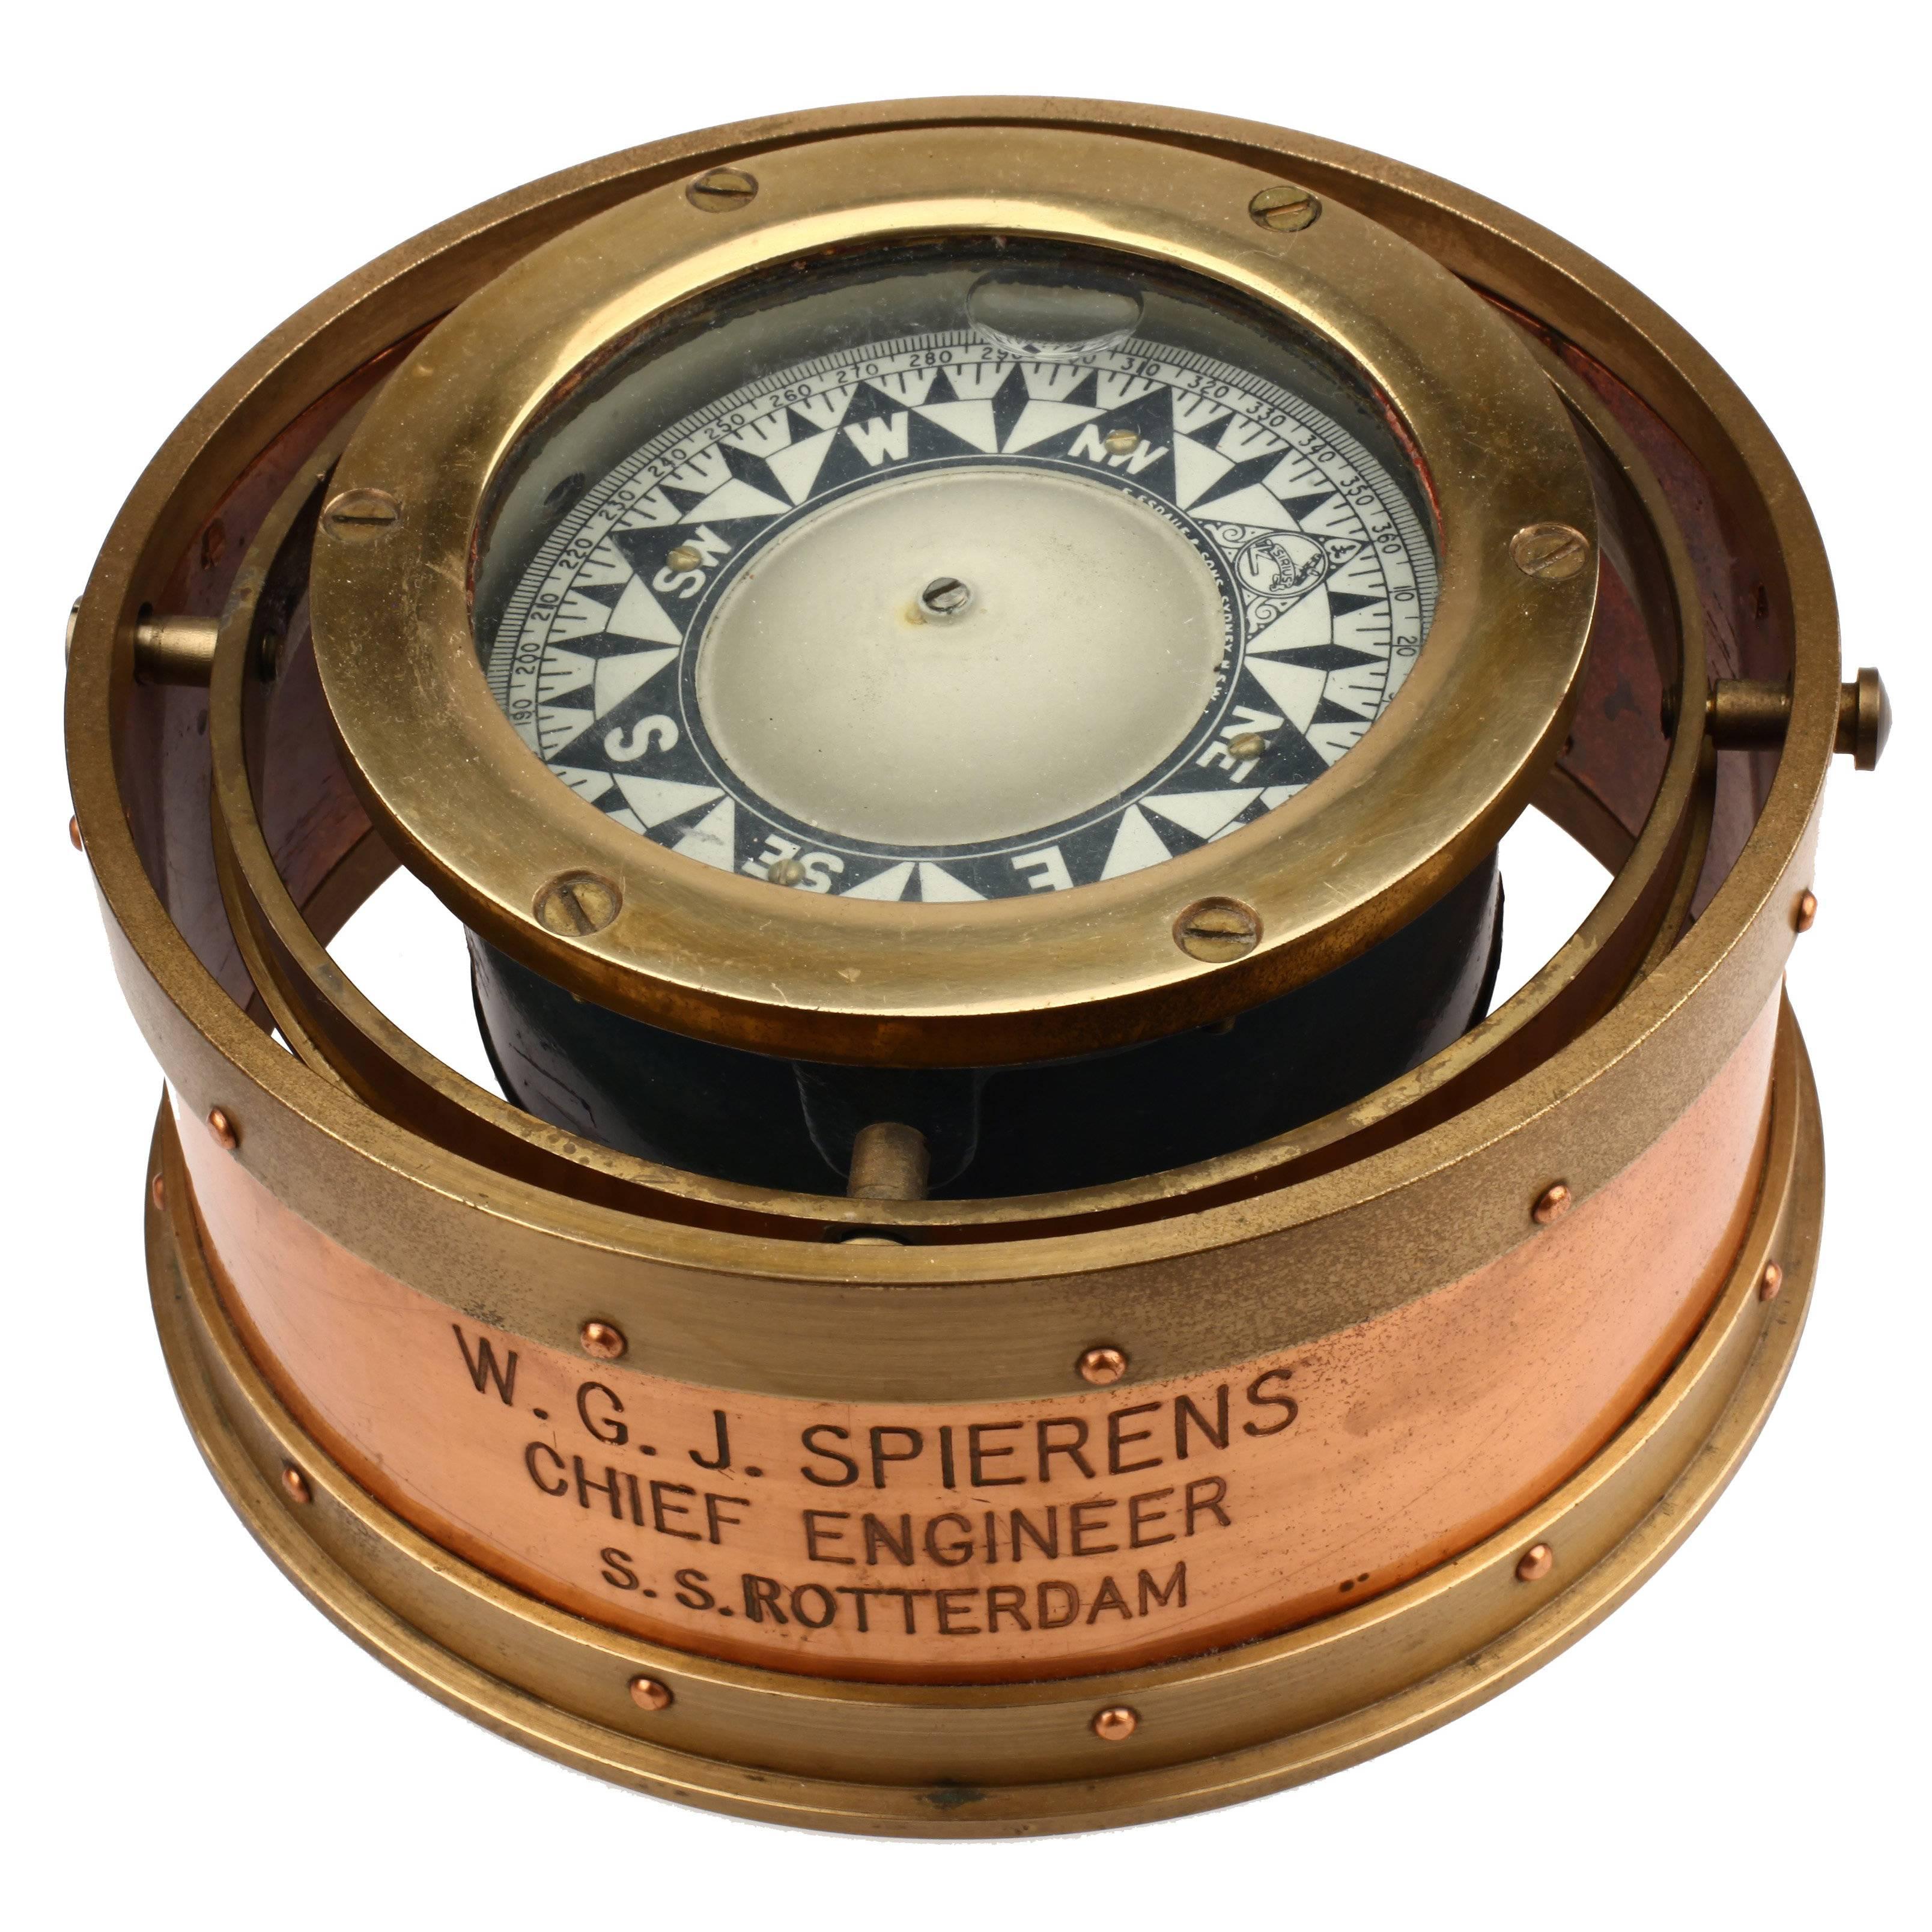 E. Esdaile & Sons Sydney Nautical Brass Compass SS Rotterdam For Sale